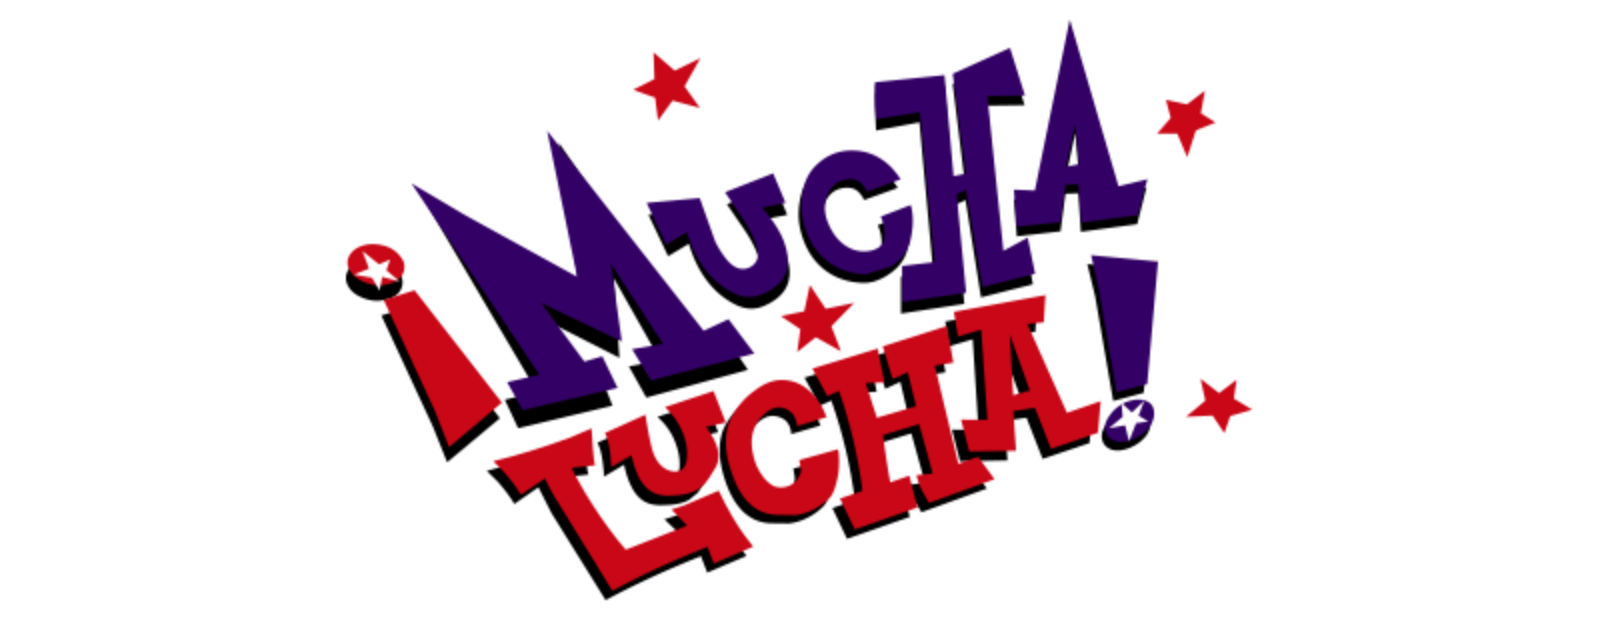 Mucha Lucha Complete 